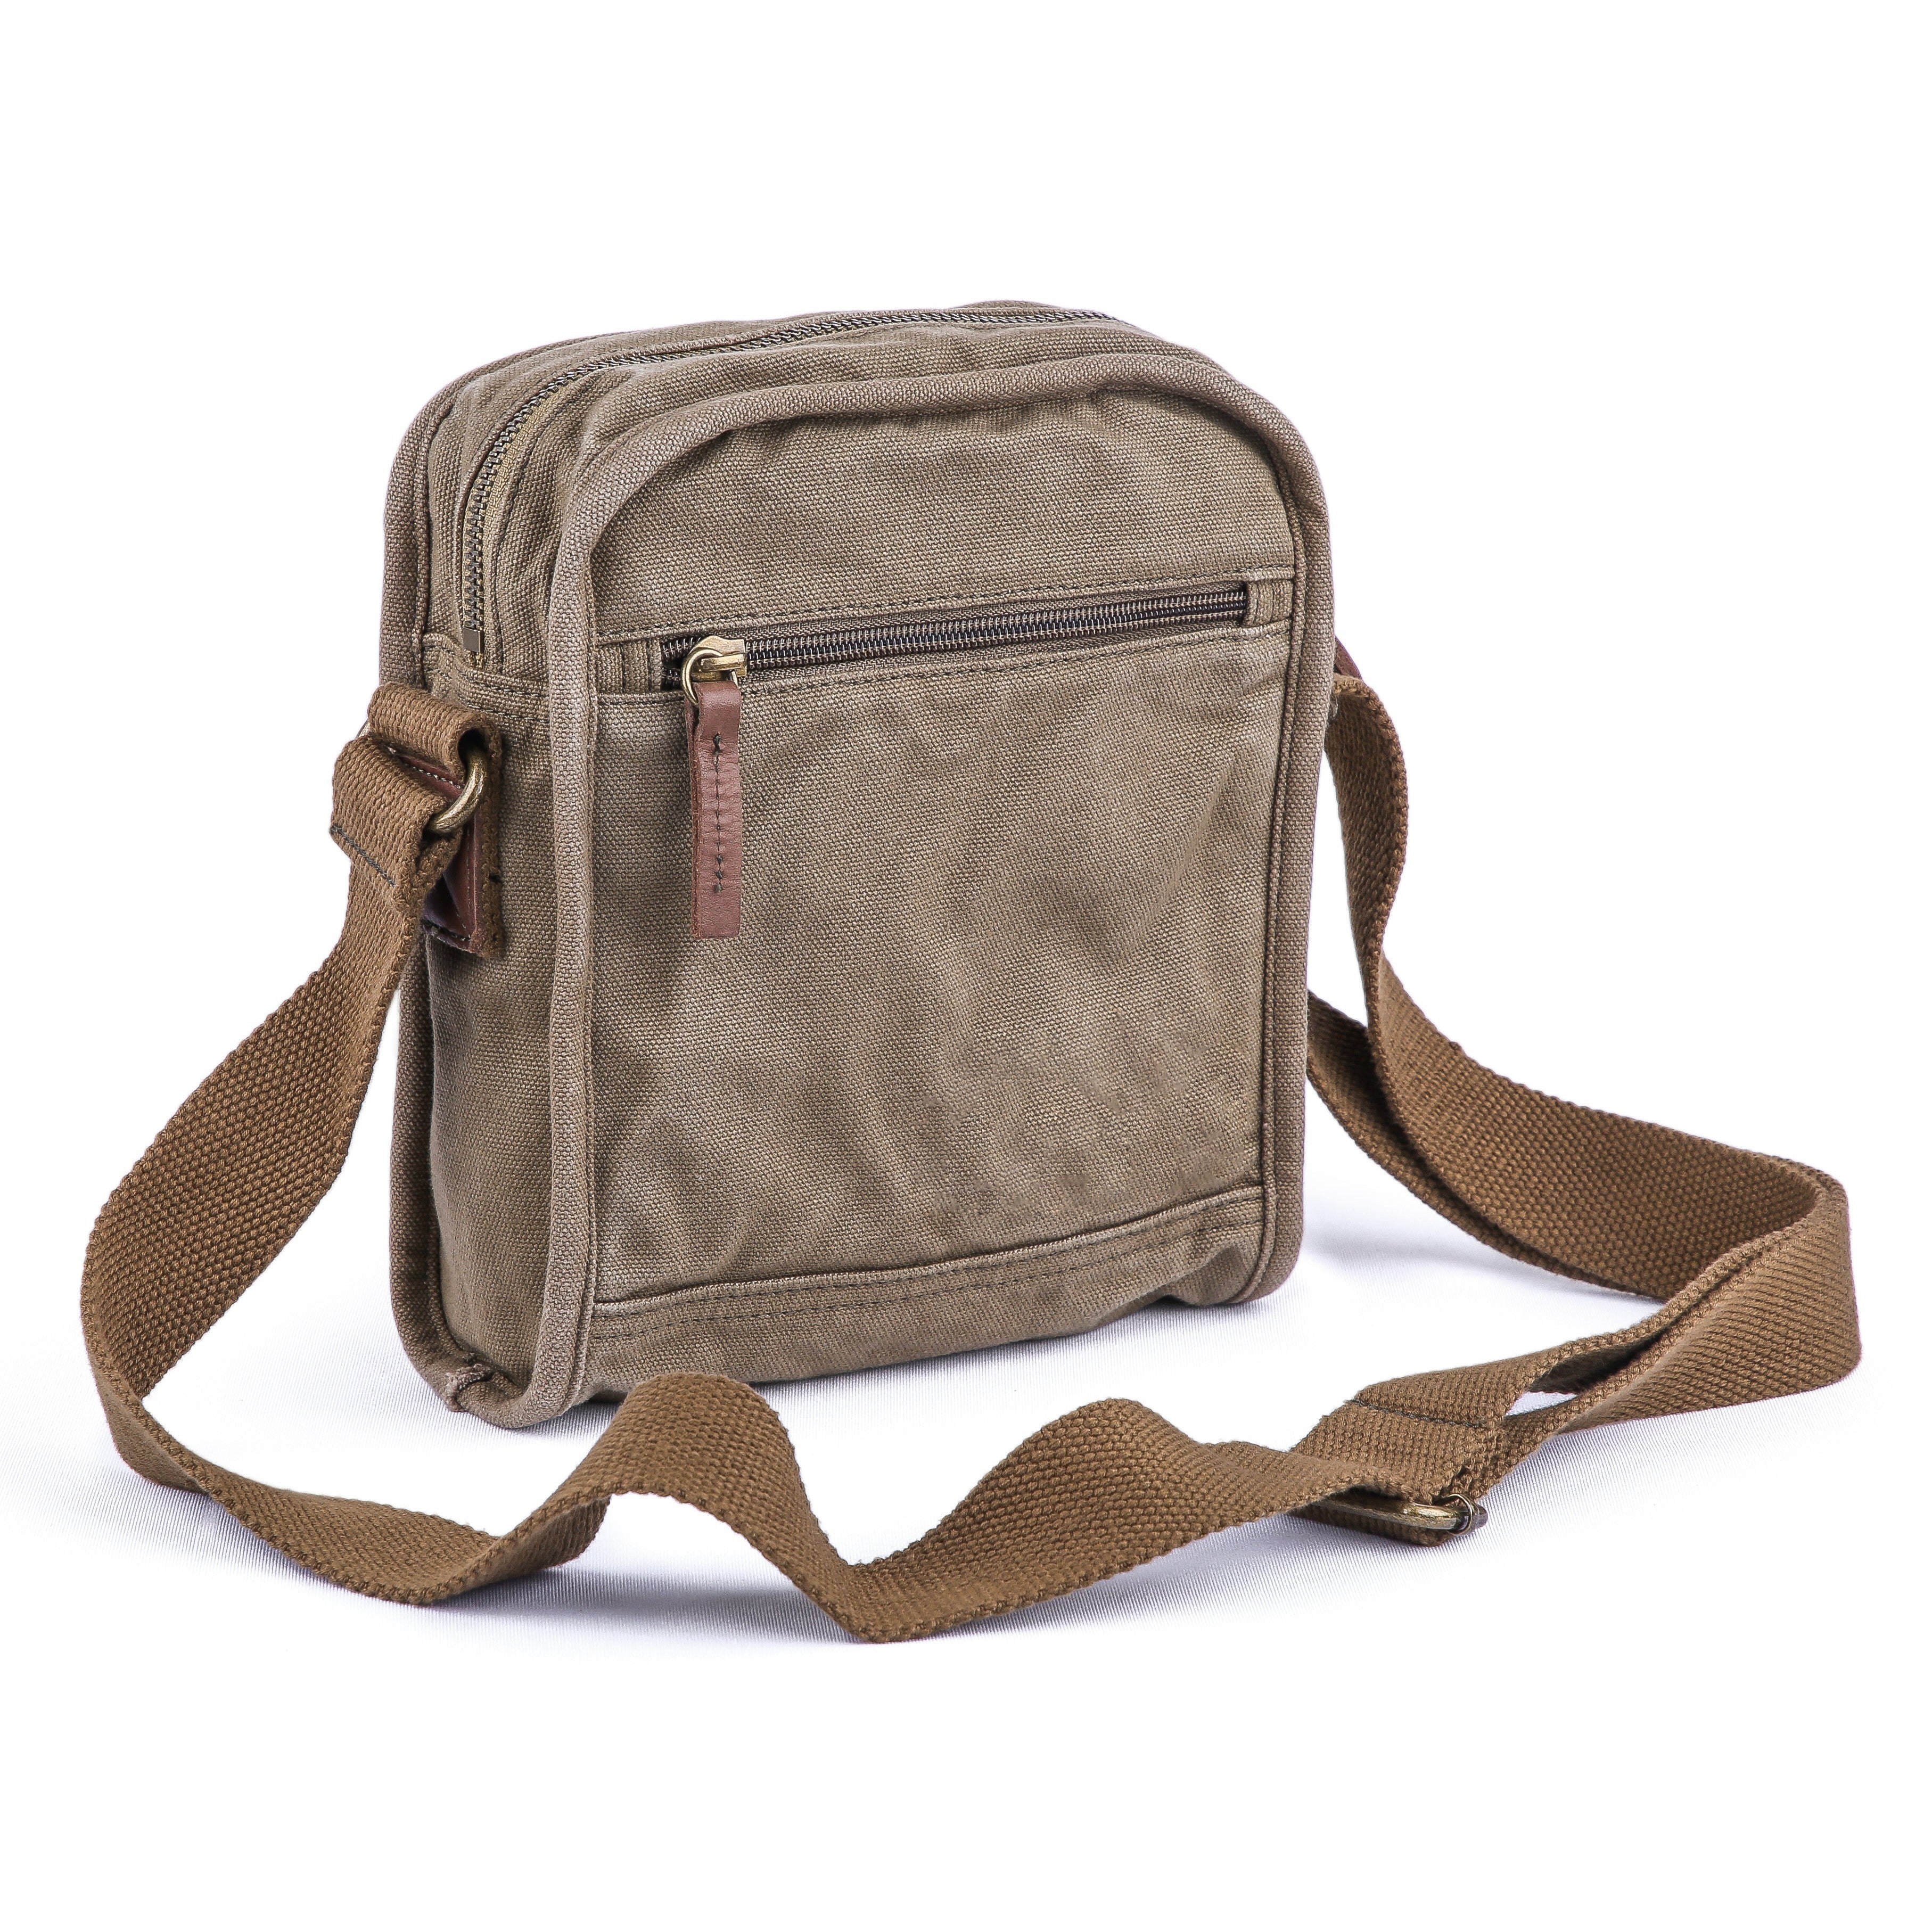 Velez Brown Leather Crossbody Messenger Bag, Purse Made in Columbia | eBay